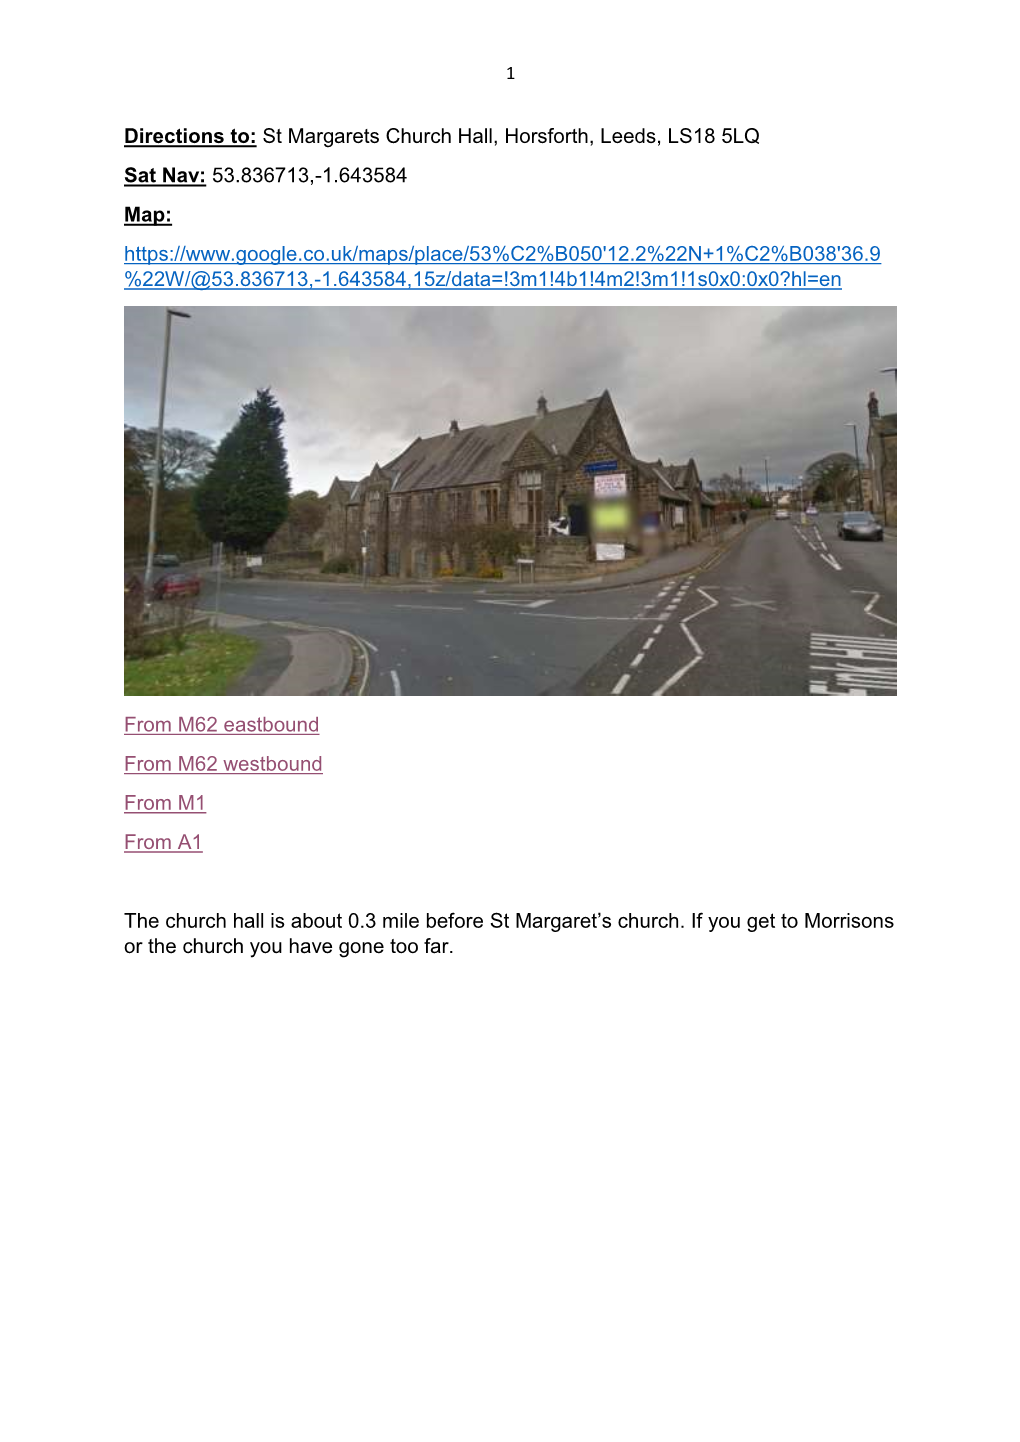 Directions To: St Margarets Church Hall, Horsforth, Leeds, LS18 5LQ